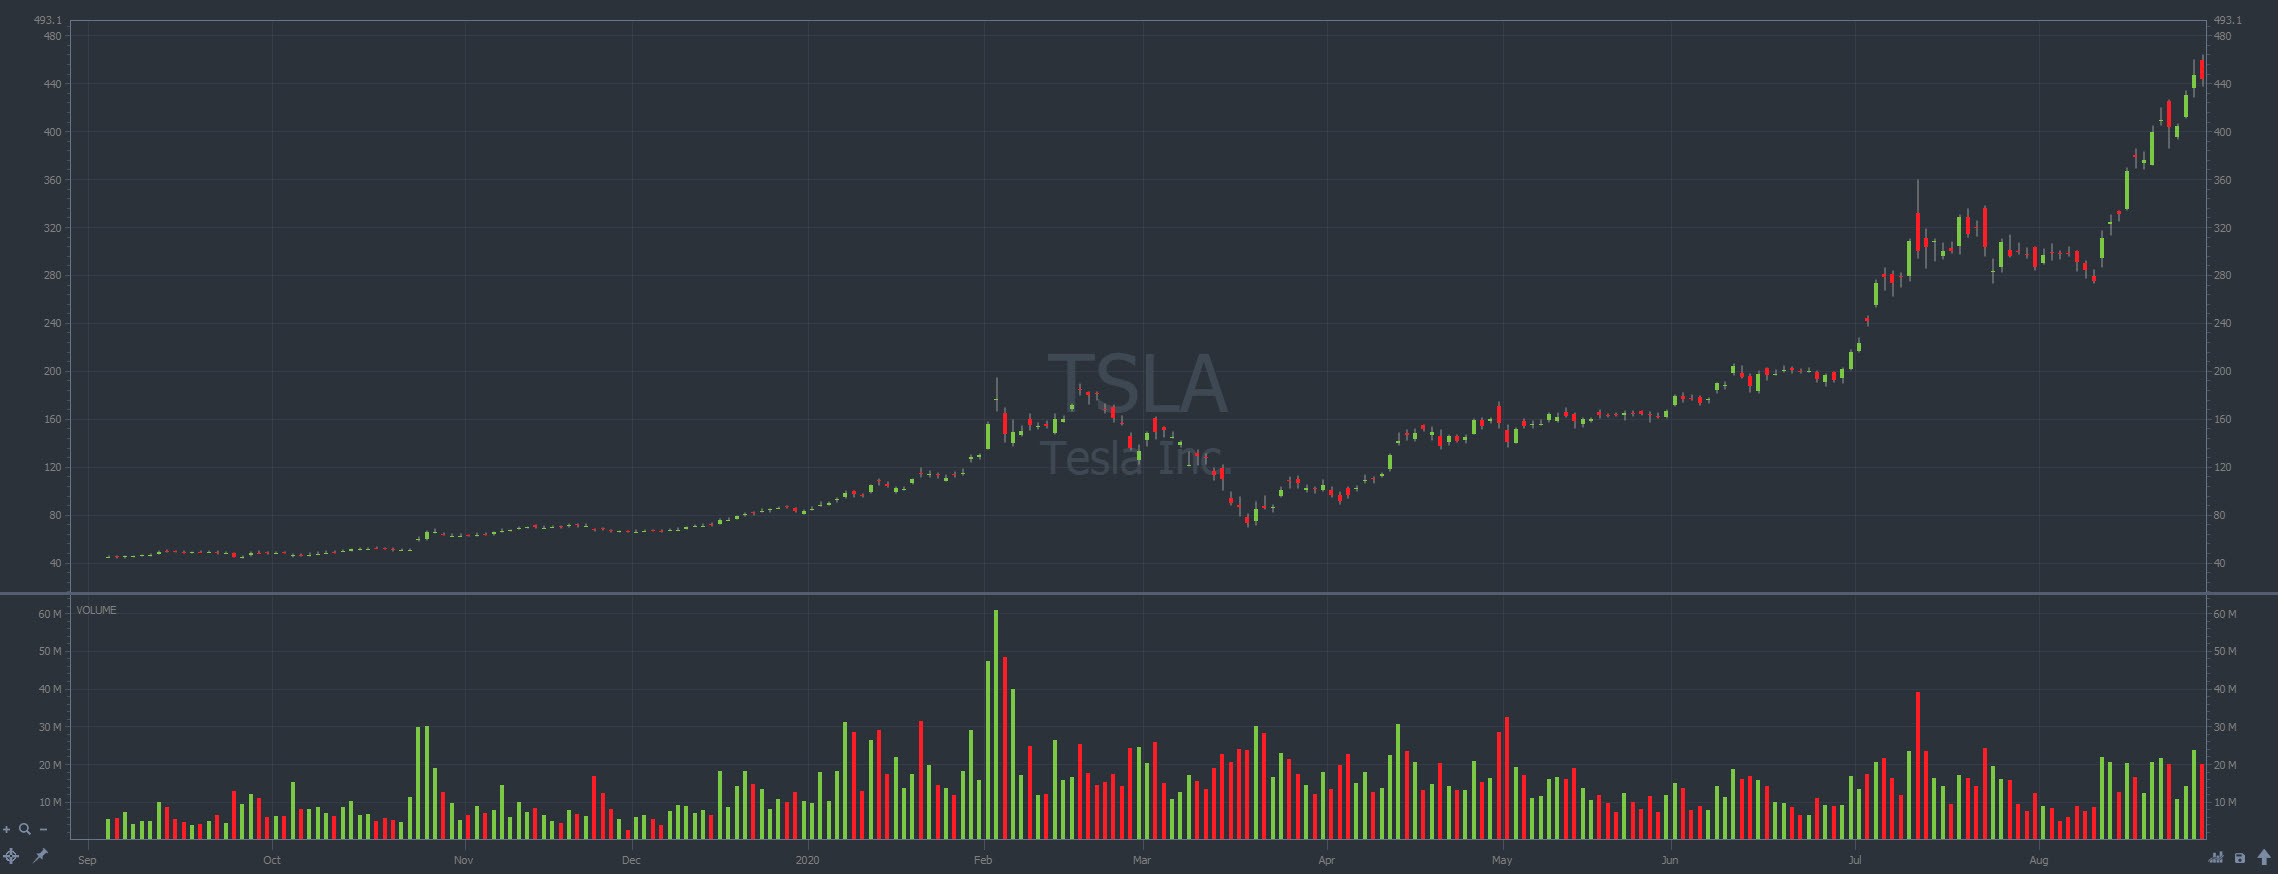 TSLA market highs